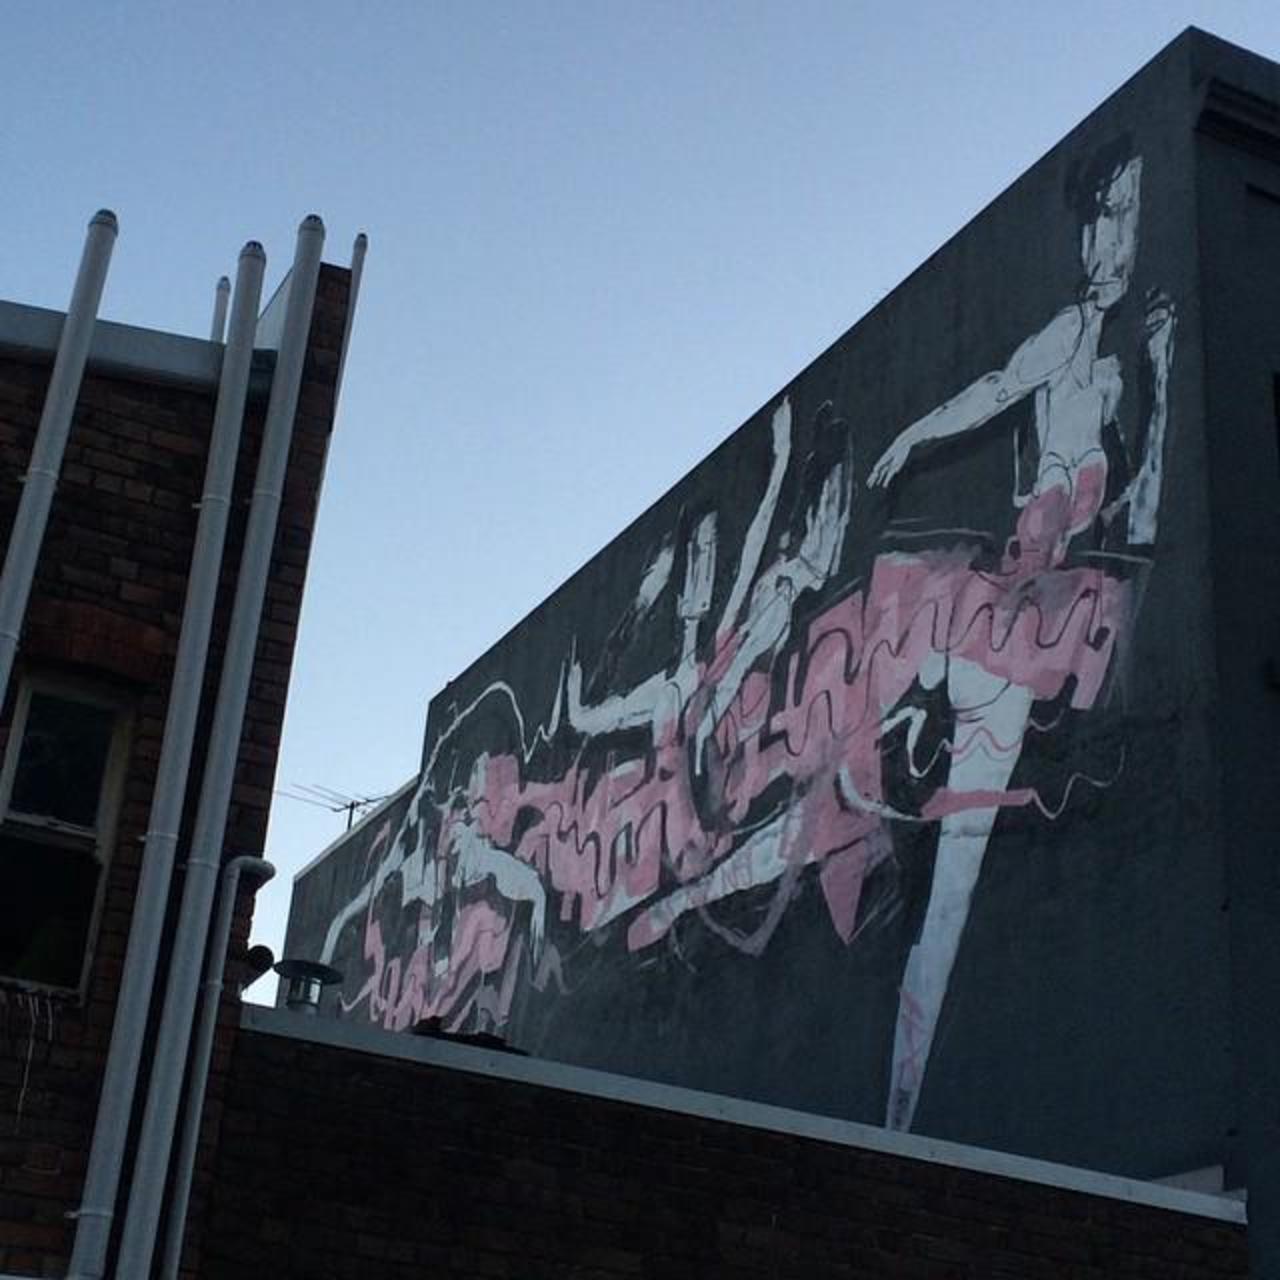 Listerinas up high in Darlinghurst. #lister #listerina #streetart #graffiti #urbex #walls #instagrafite #mural #str… http://t.co/6AciO8LIUe